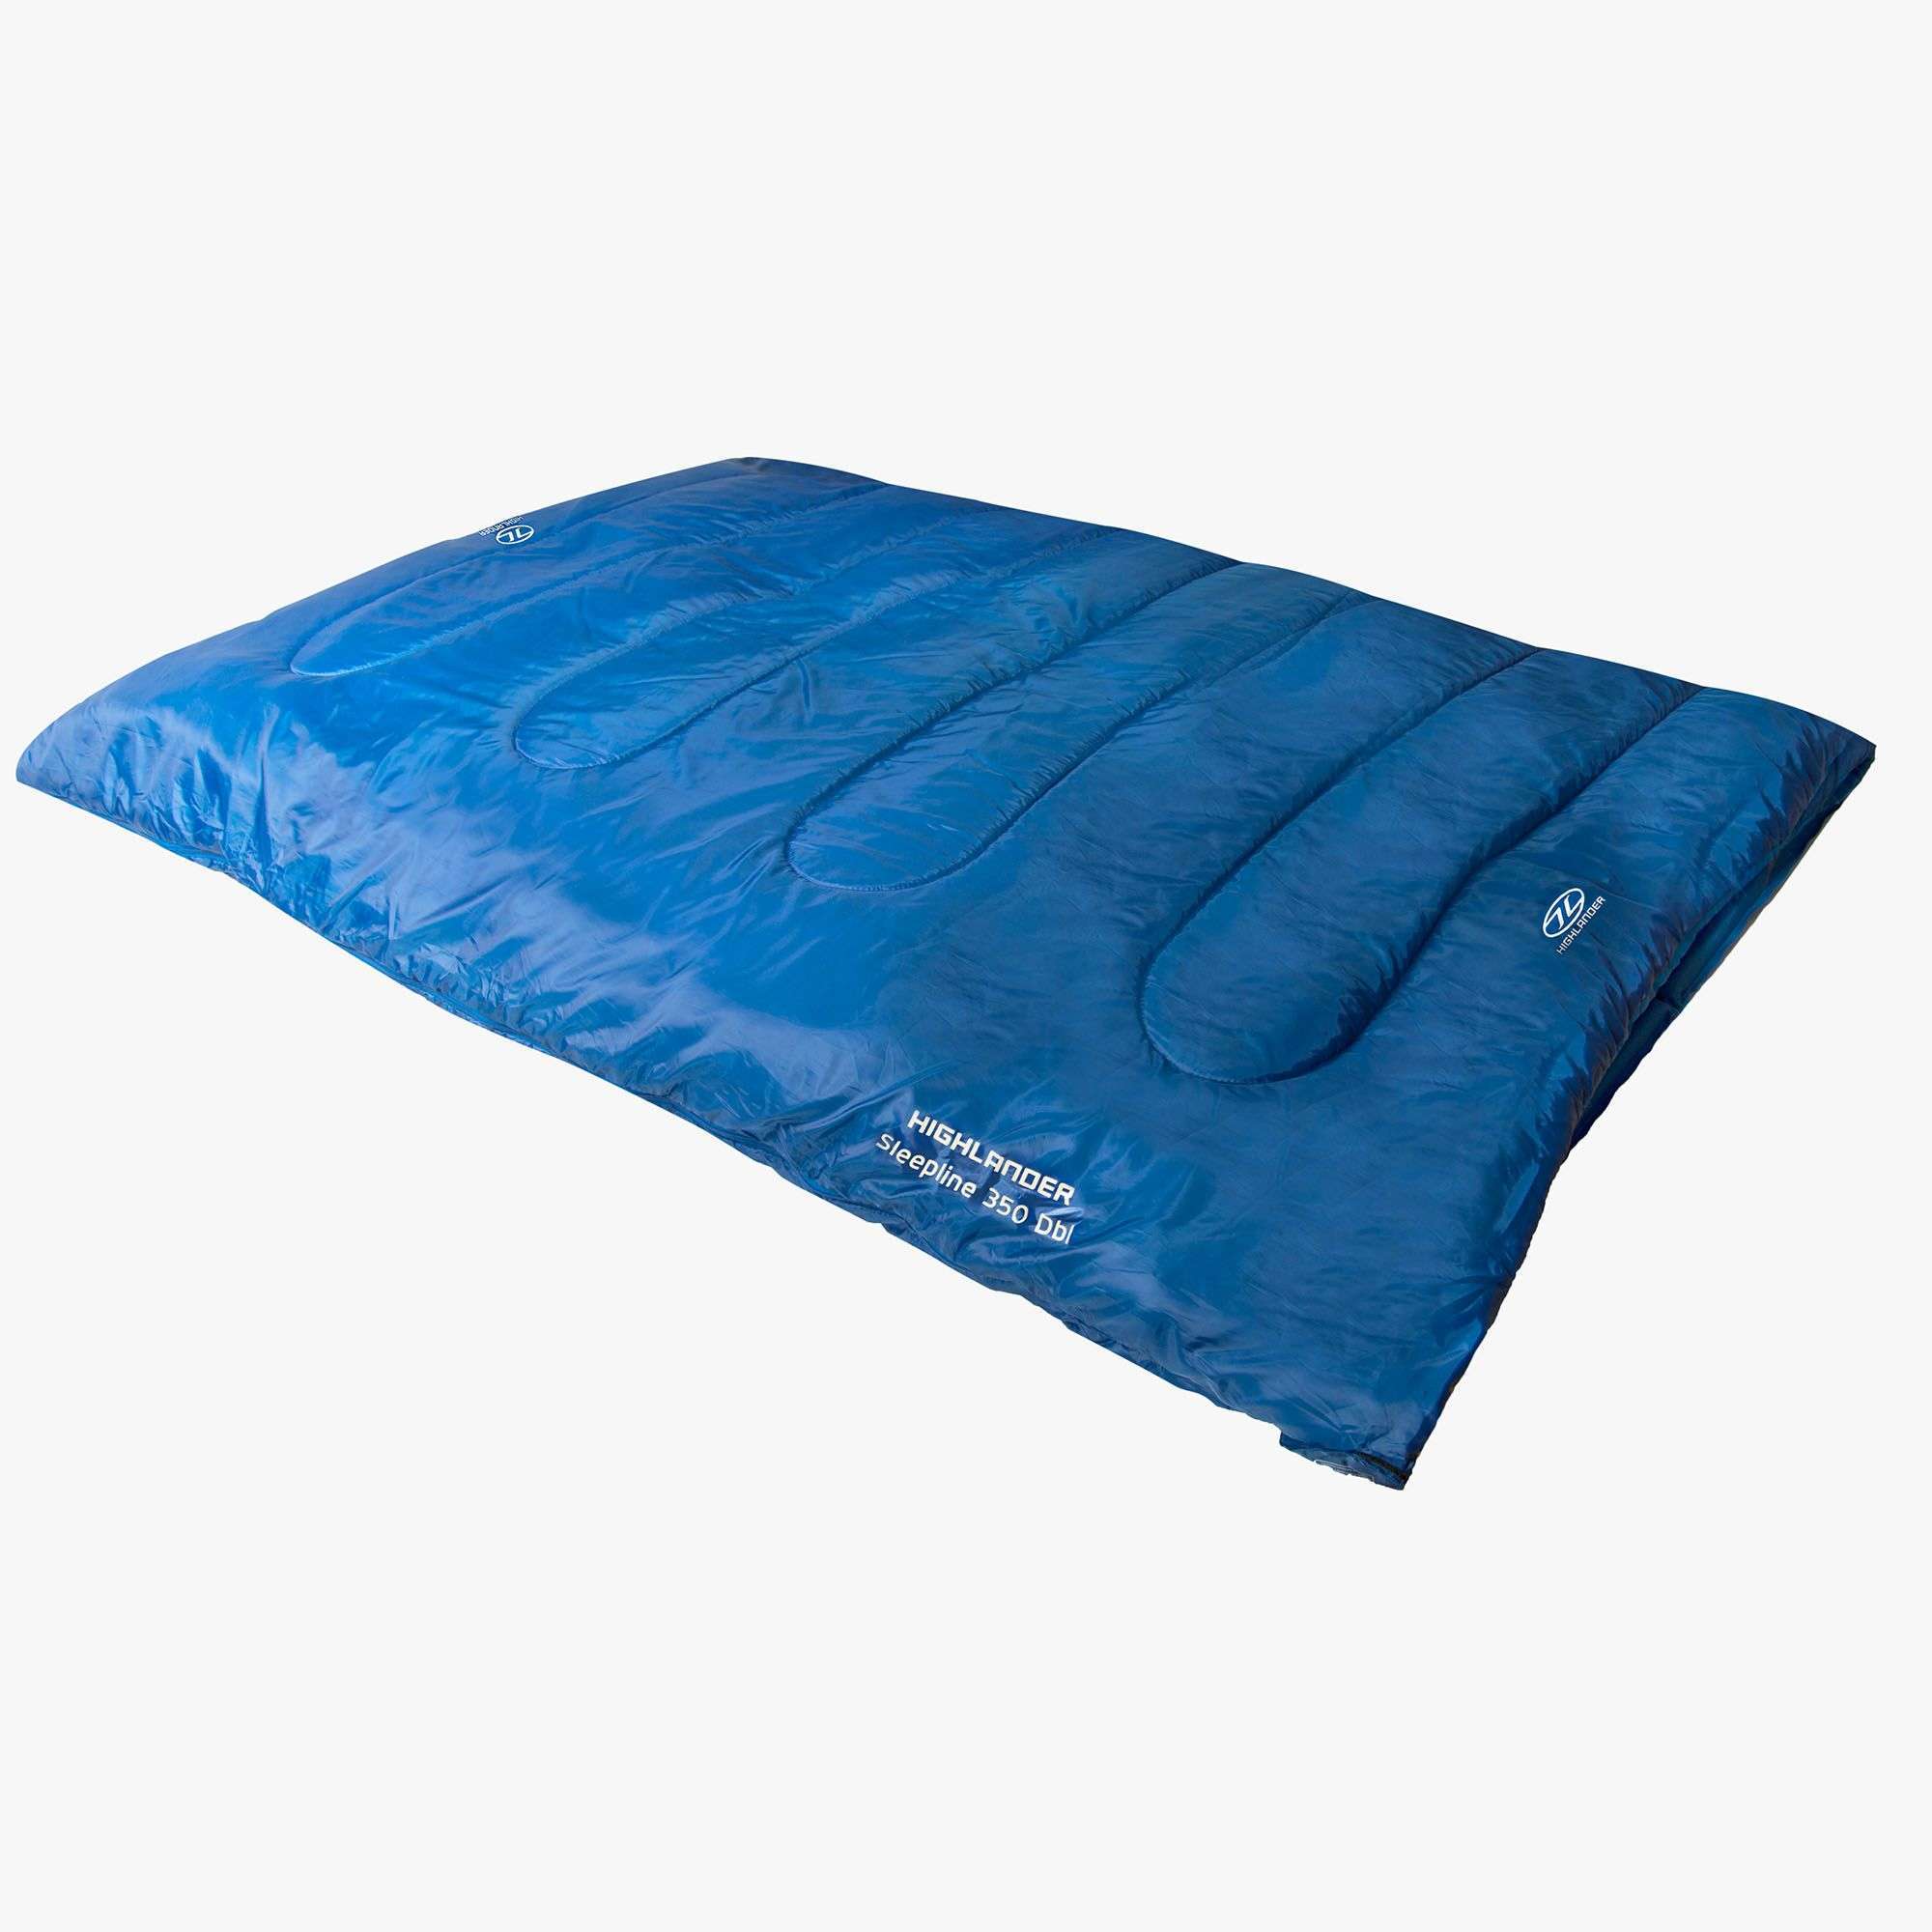 Highlander, Highlander Sleepline 350 Double Sleeping Bag, Sleeping Bags, Wylies Outdoor World,